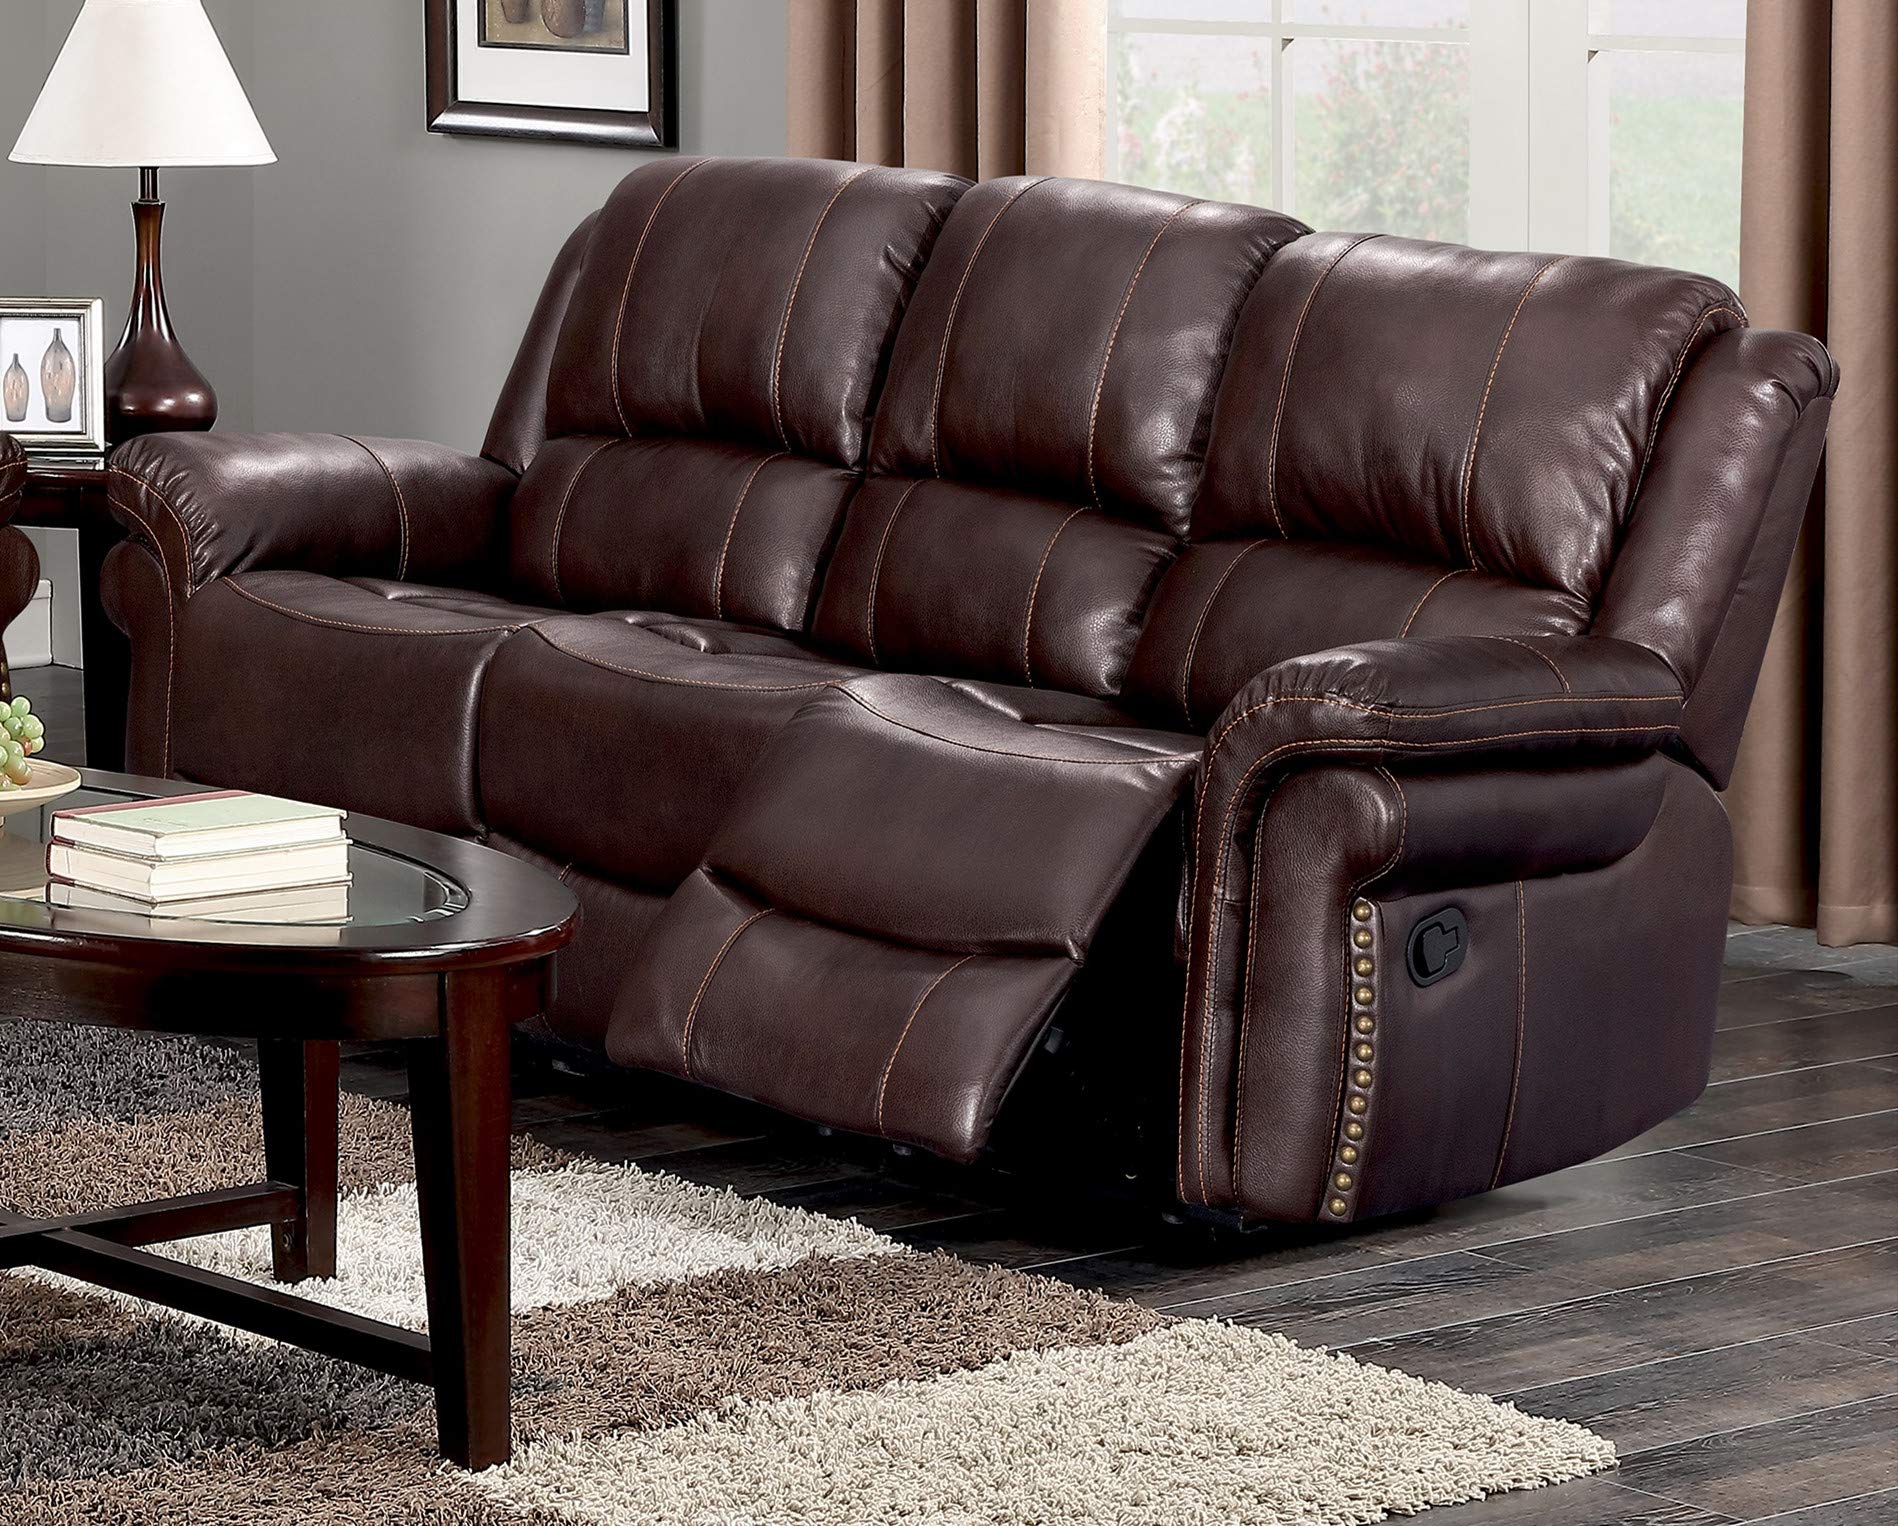 GTU Furniture Brown Leather Reclining Sofa